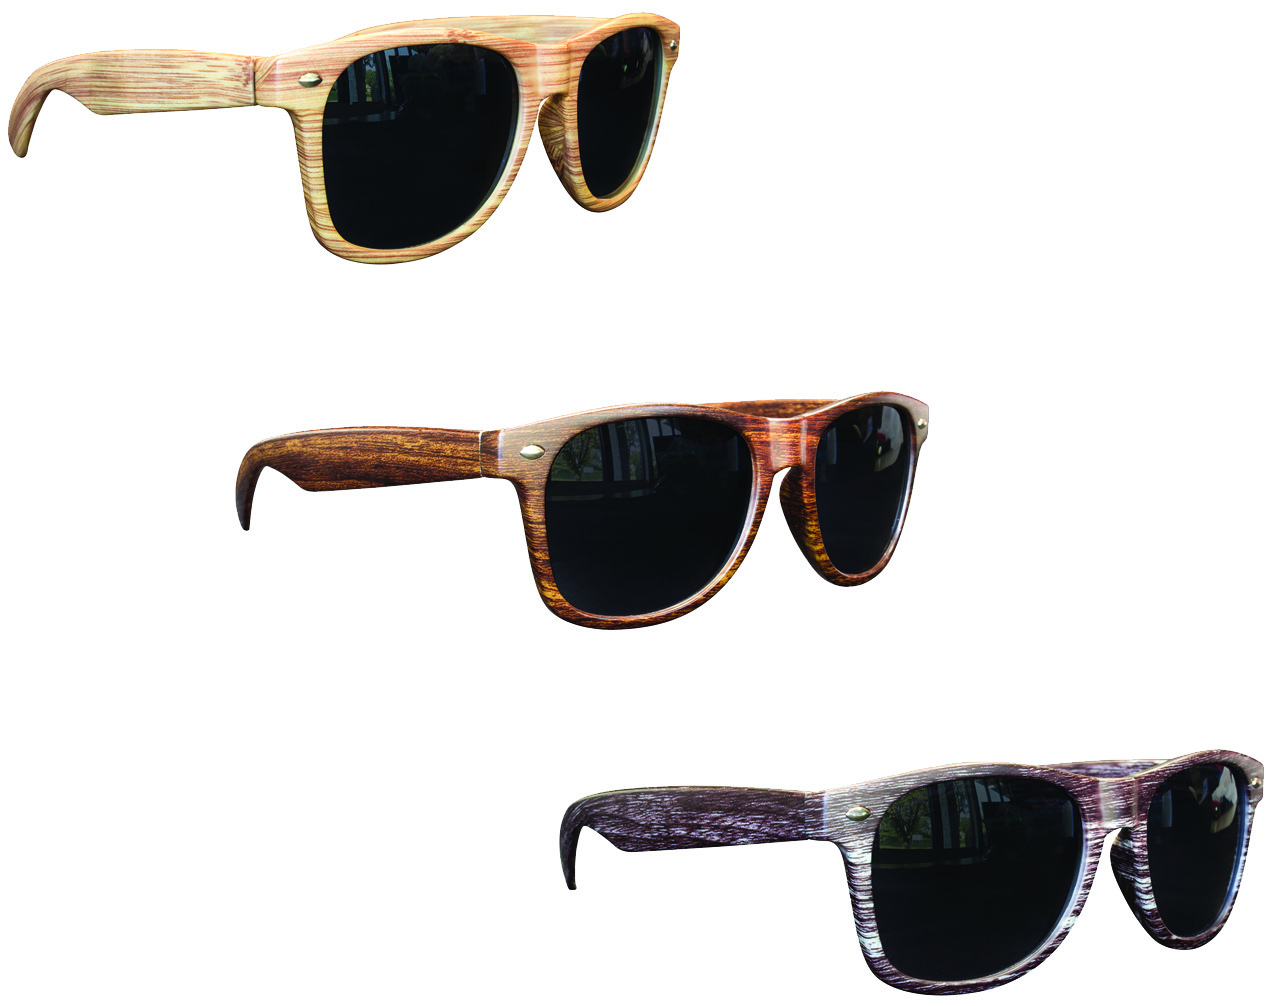 Three Shades Of Woodgrain sunglasses